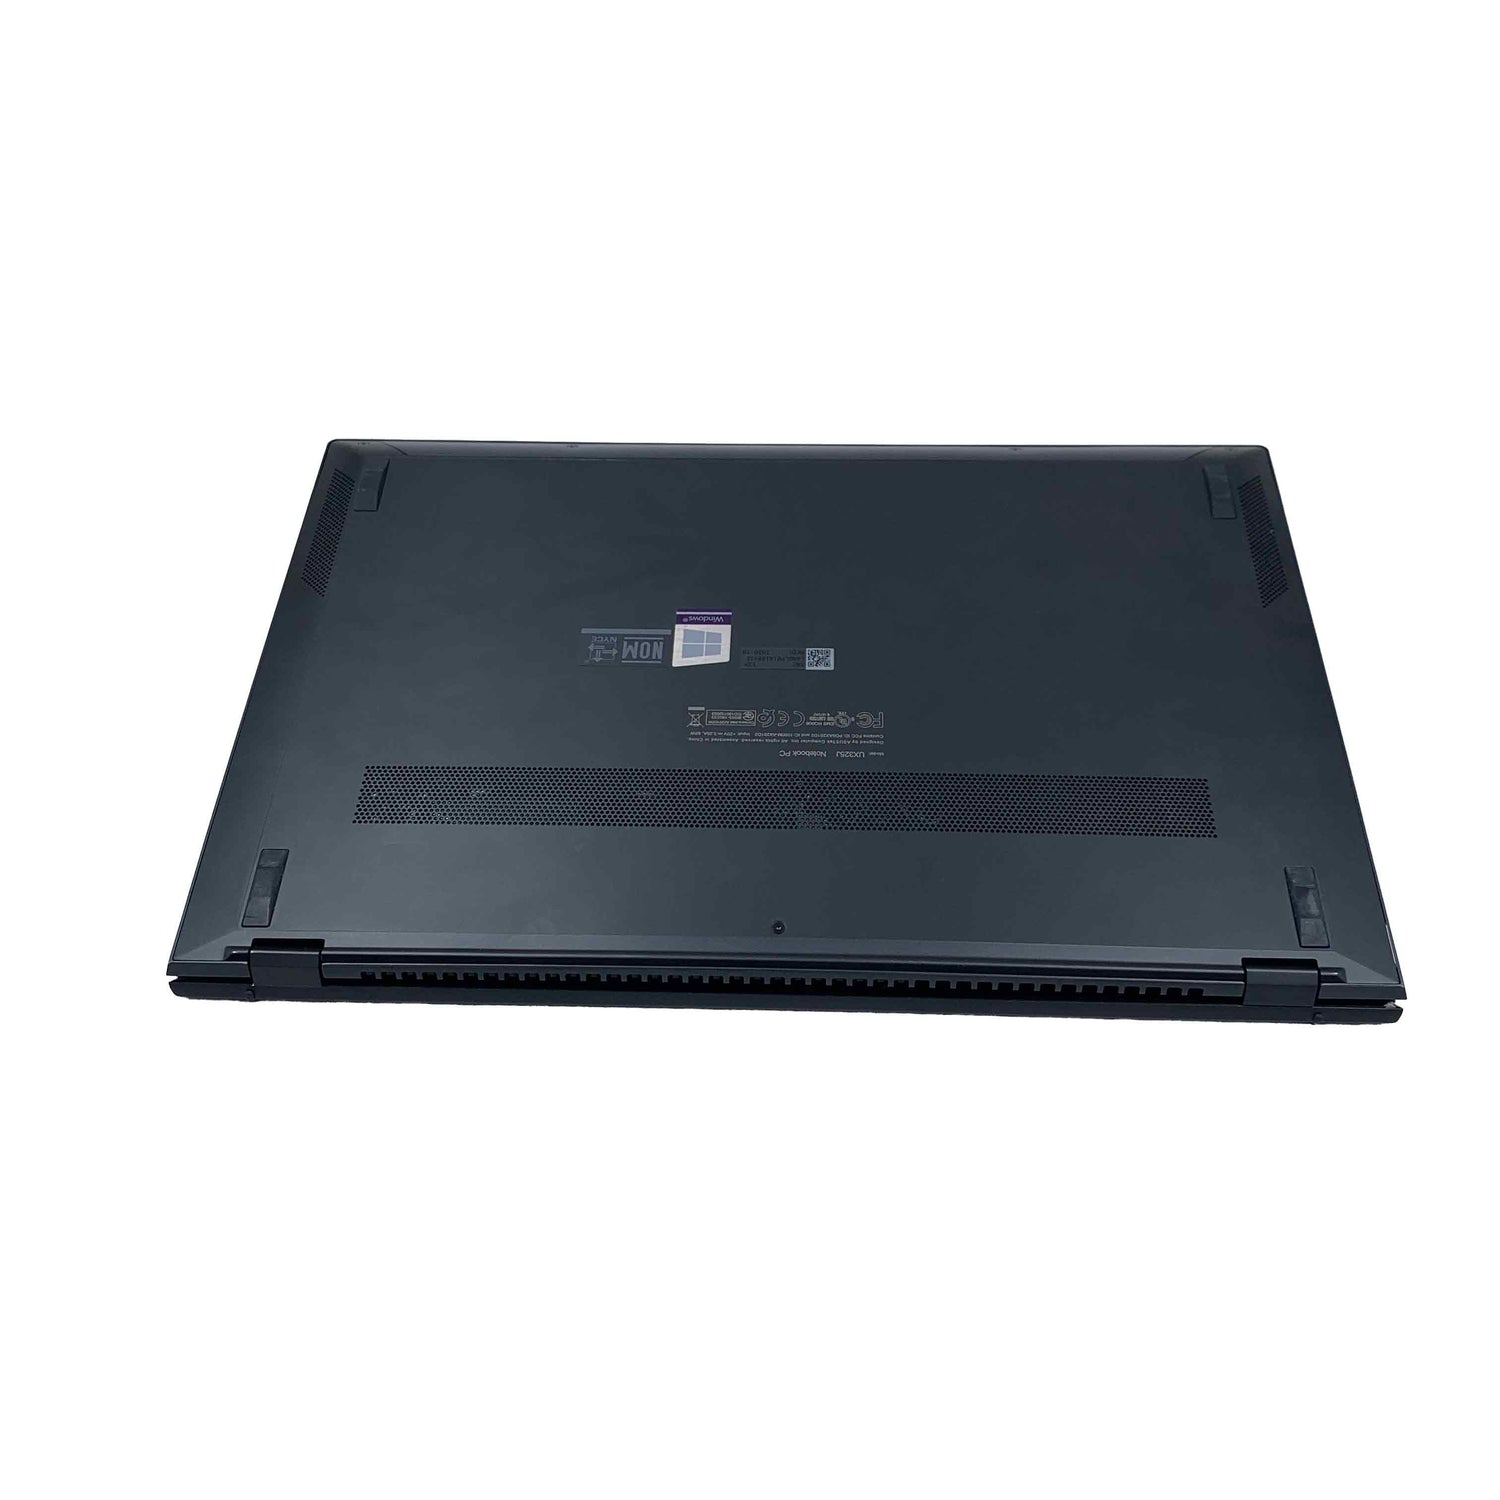 Laptop ASUS Zenbook 13 UX325JA-AB51 (2020) (seminuevo)